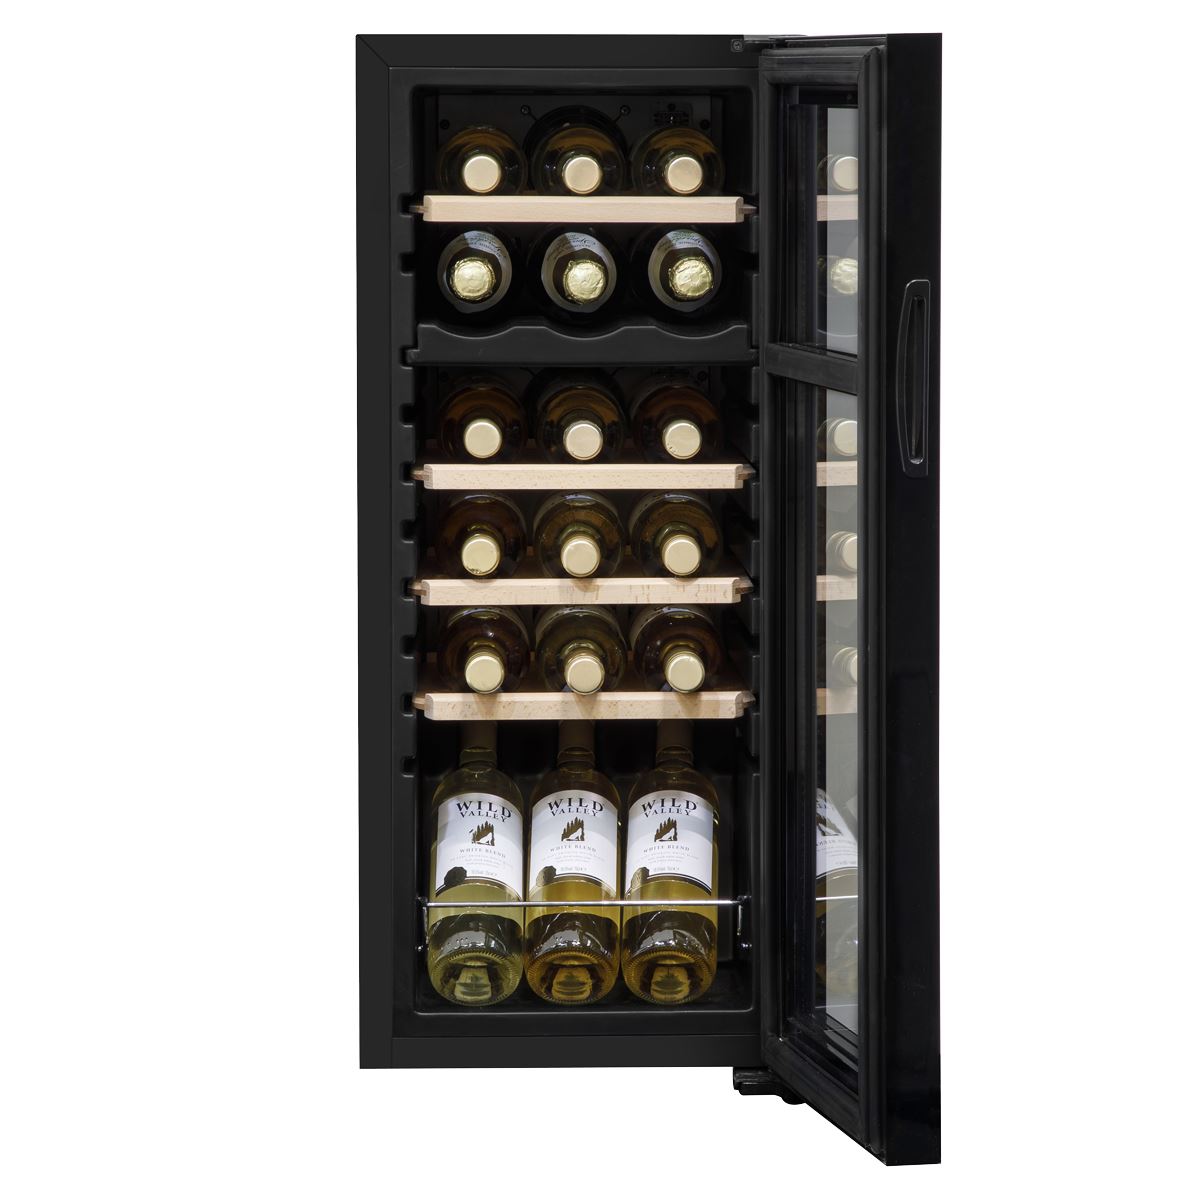 Baridi 18 Bottle Dual Zone Wine Cooler, Fridge with Digital Touch Screen Controls, Wooden Shelves & LED Light, Black